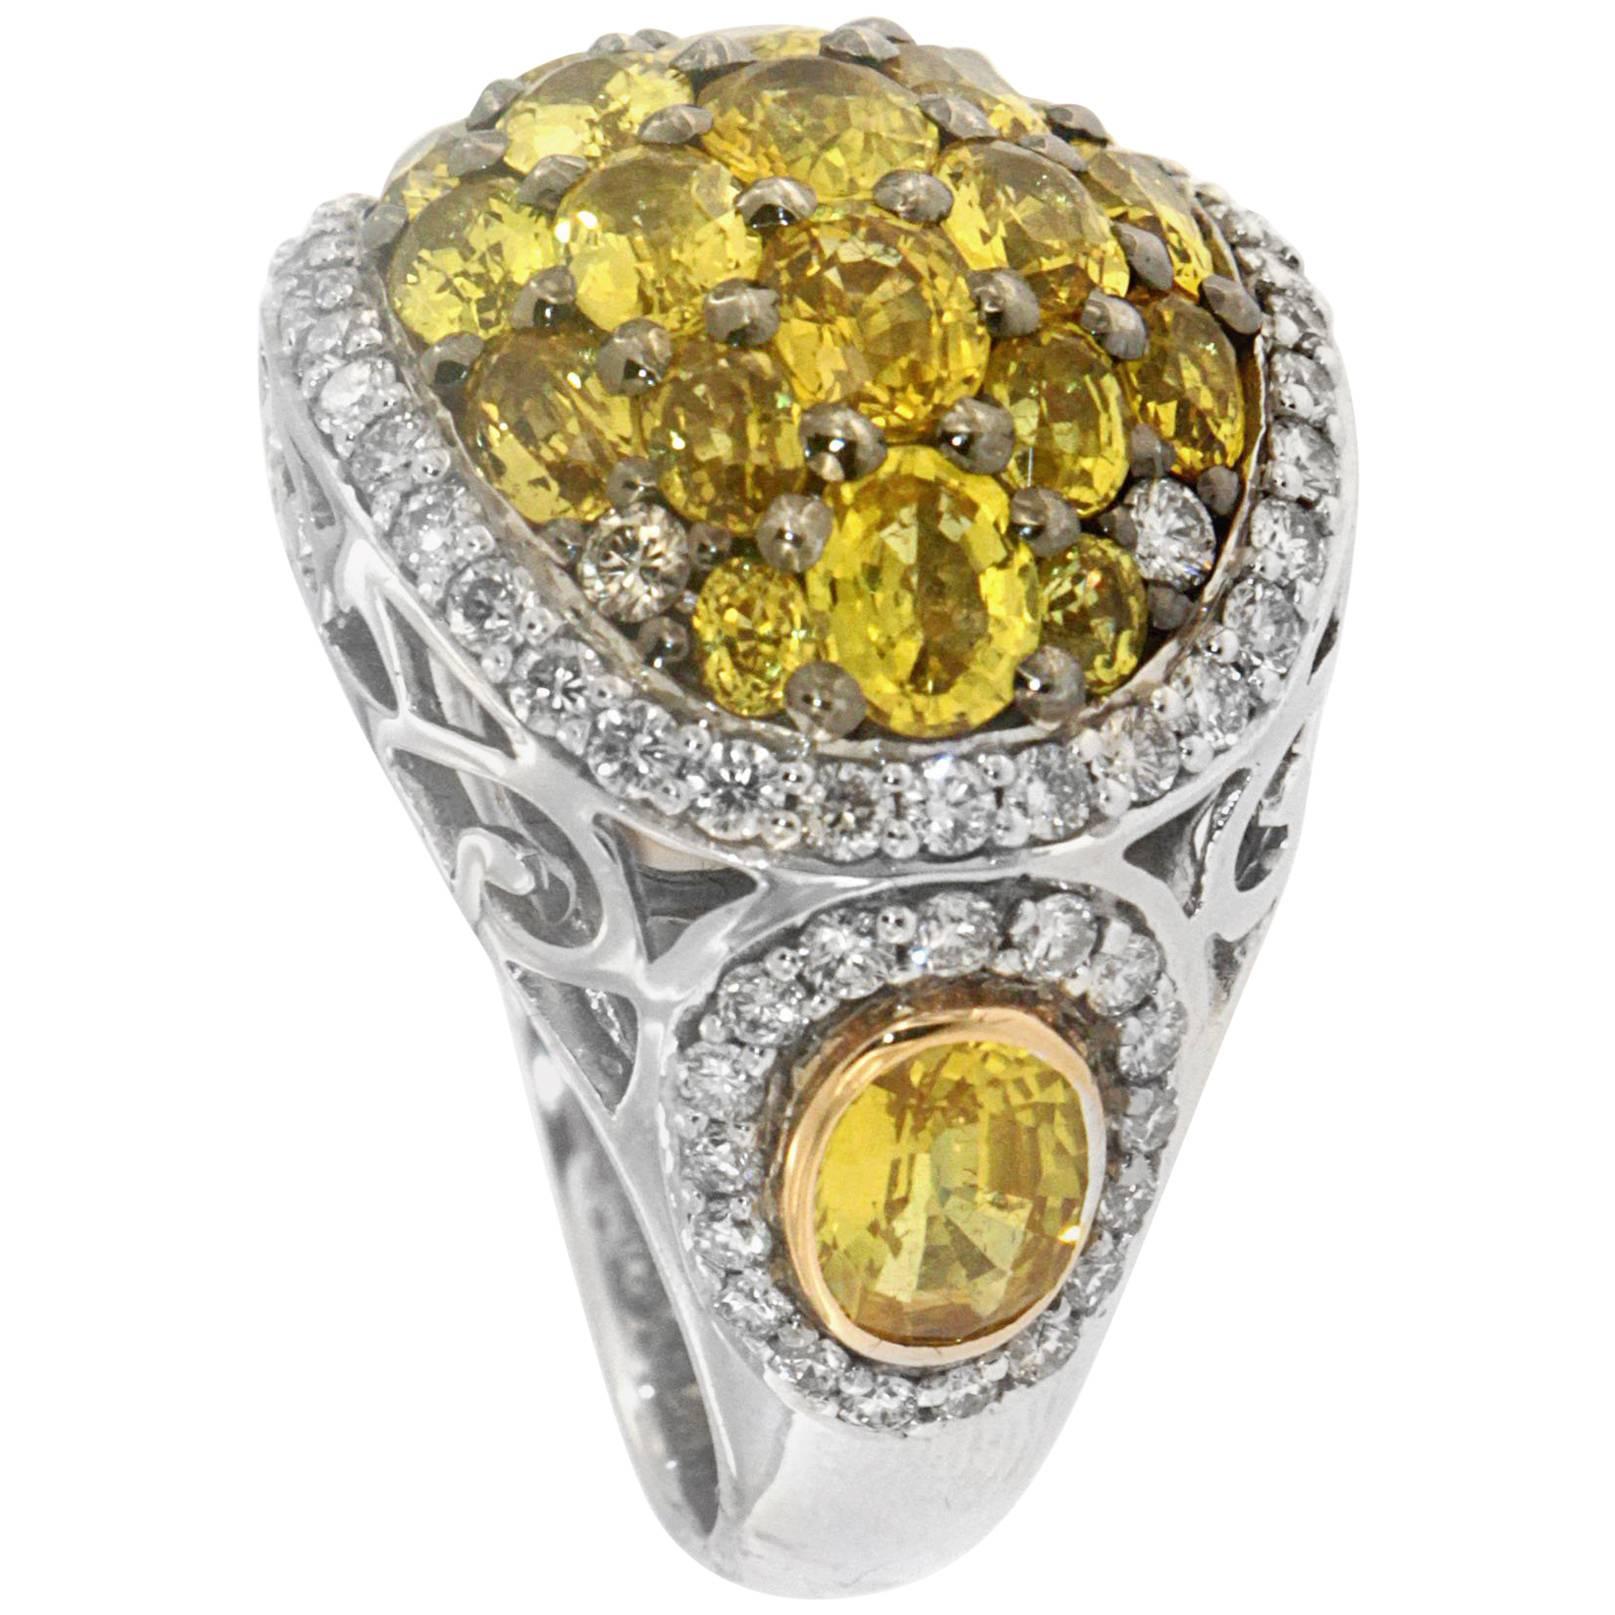 Zorab Creation Yellow Sapphire and White Diamond Cocktail Ring